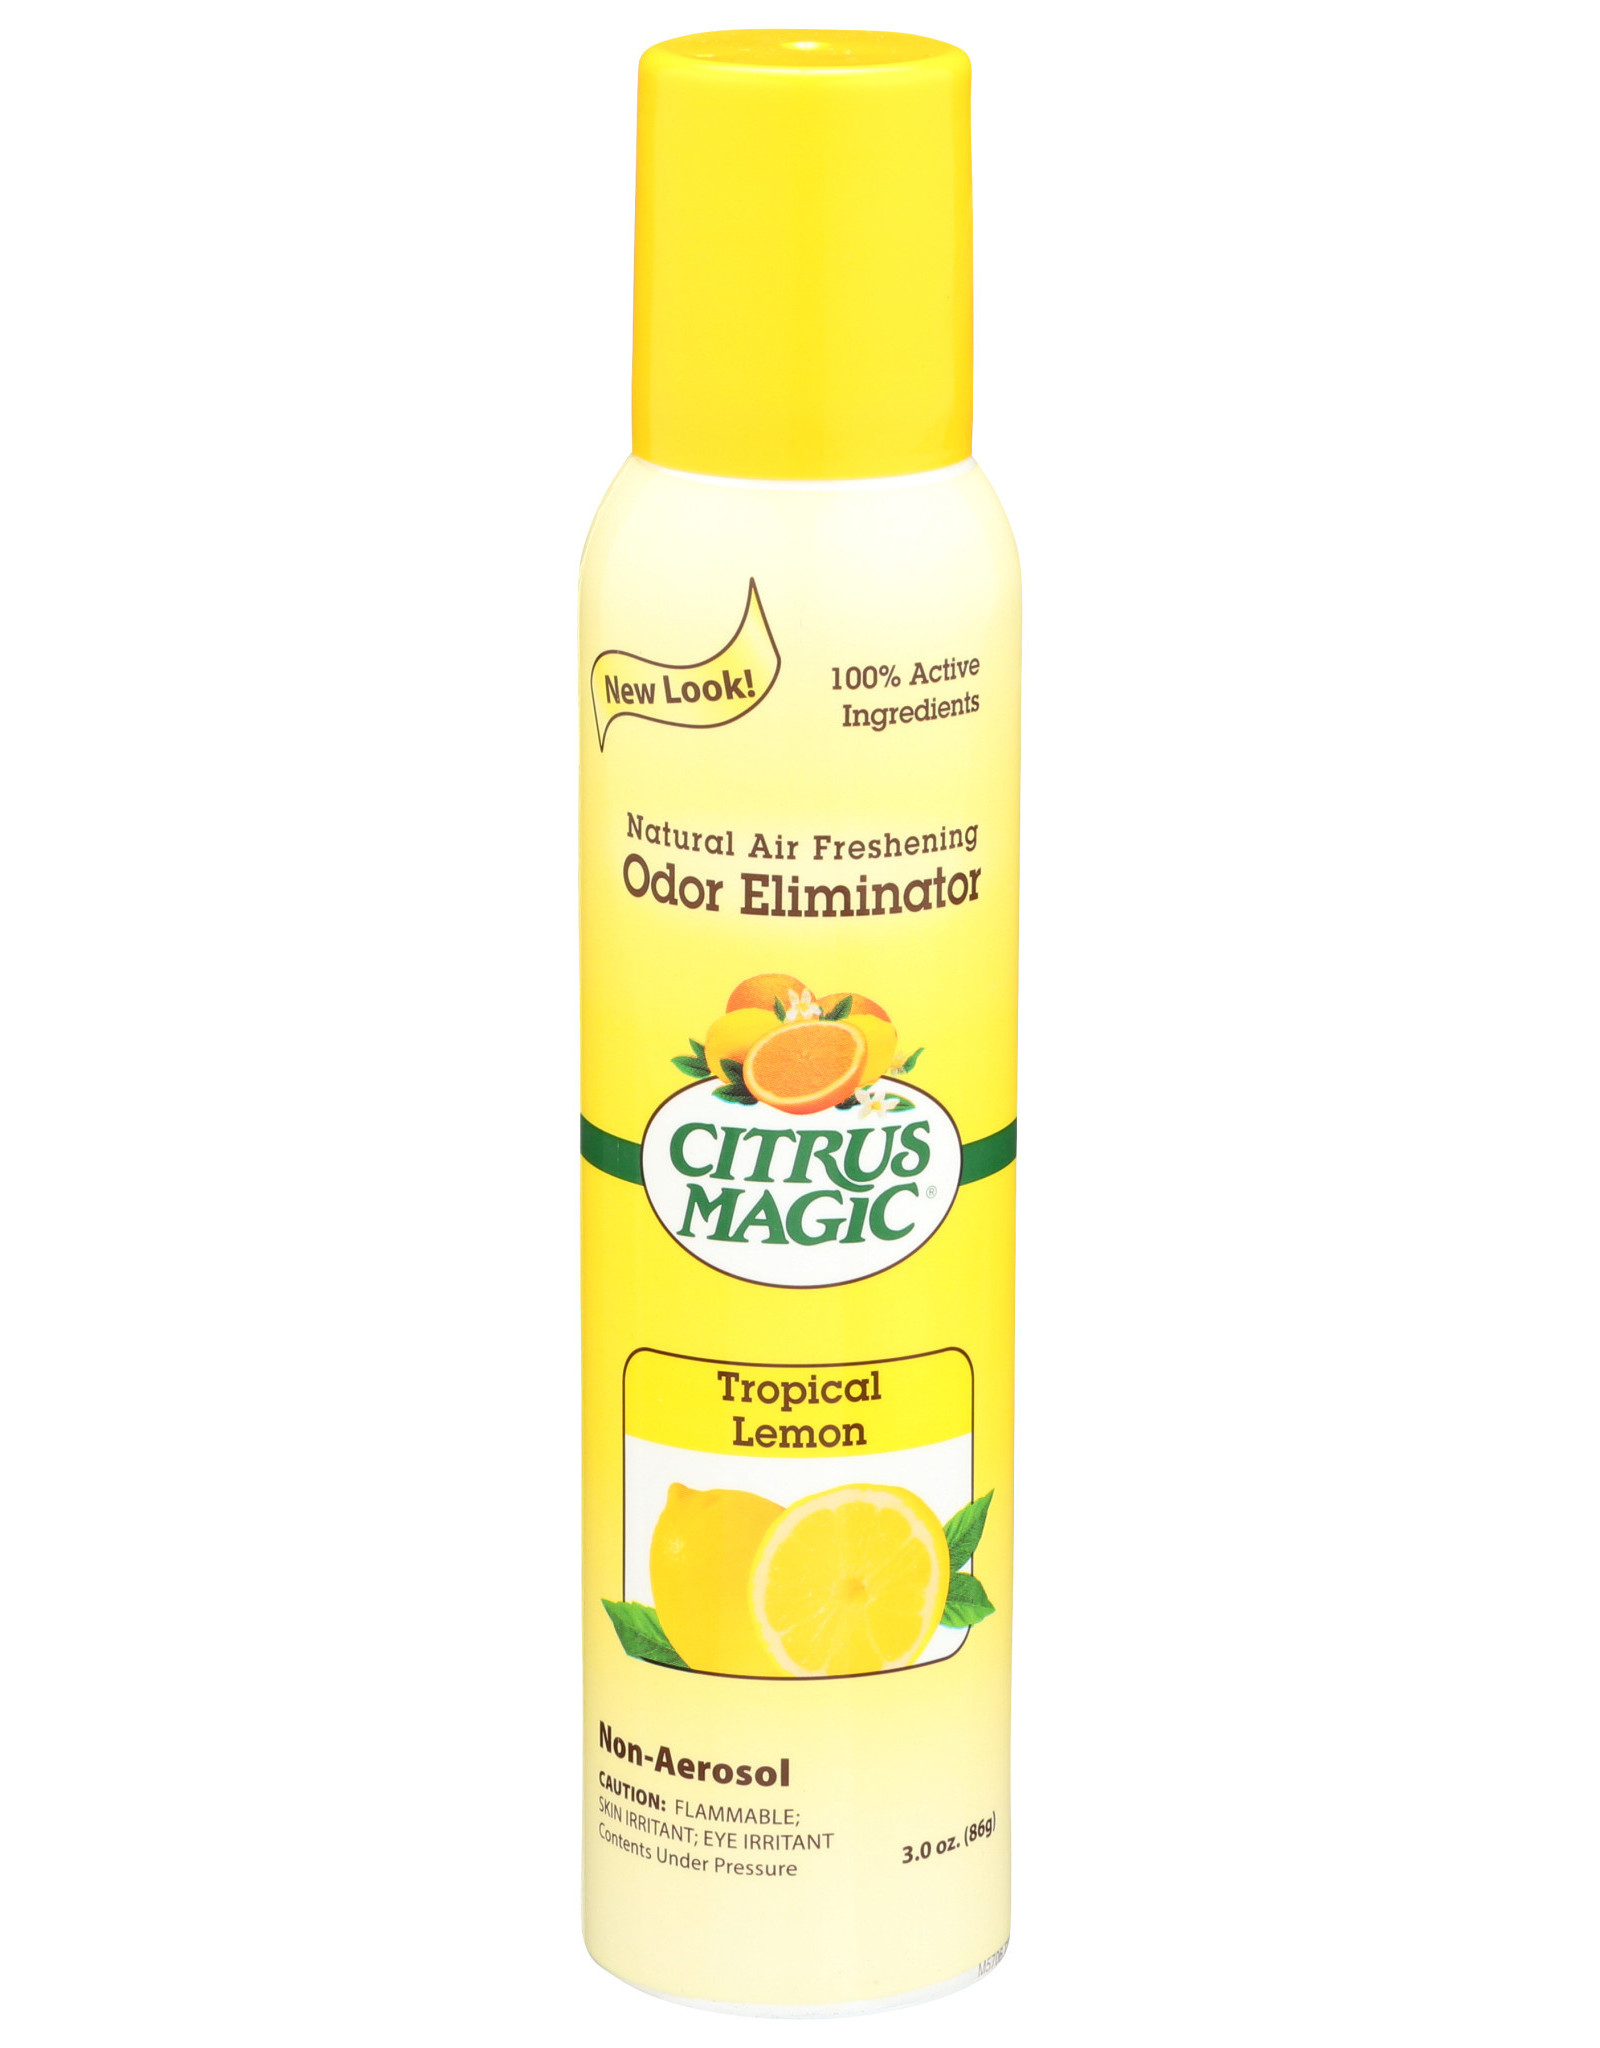 CITRUS MAGIC Citrus Magic Tropical Lemon Air Freshener 3 oz